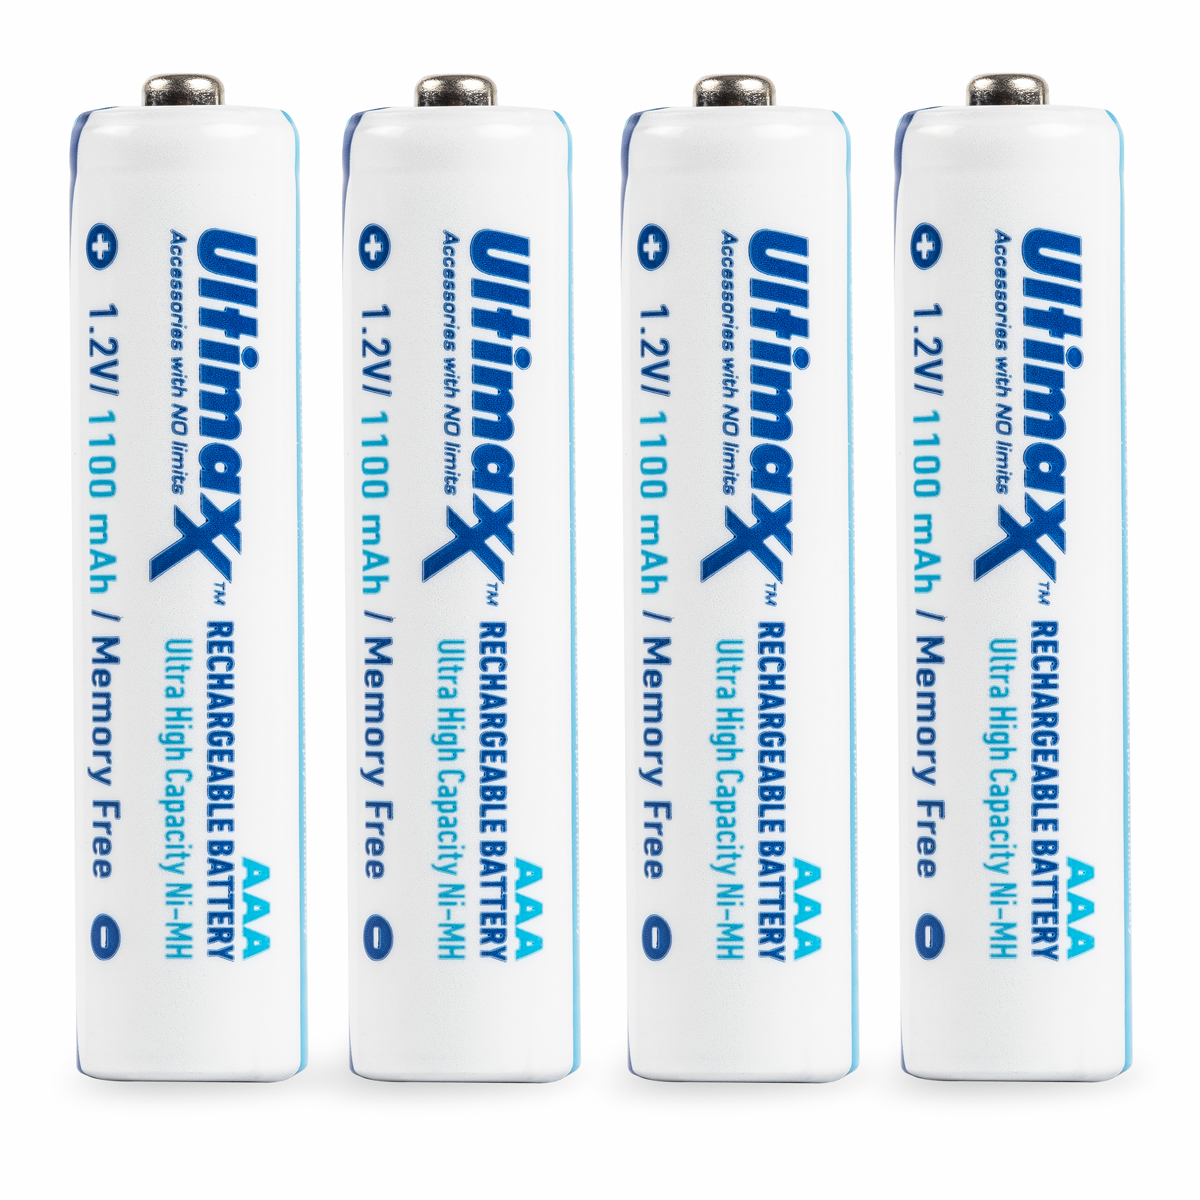 Ultimaxx 4AAA NIMH Rechargeable Batteries 1100 mAh with Ultimaxx Battery Charger for AA & AAA Batteries